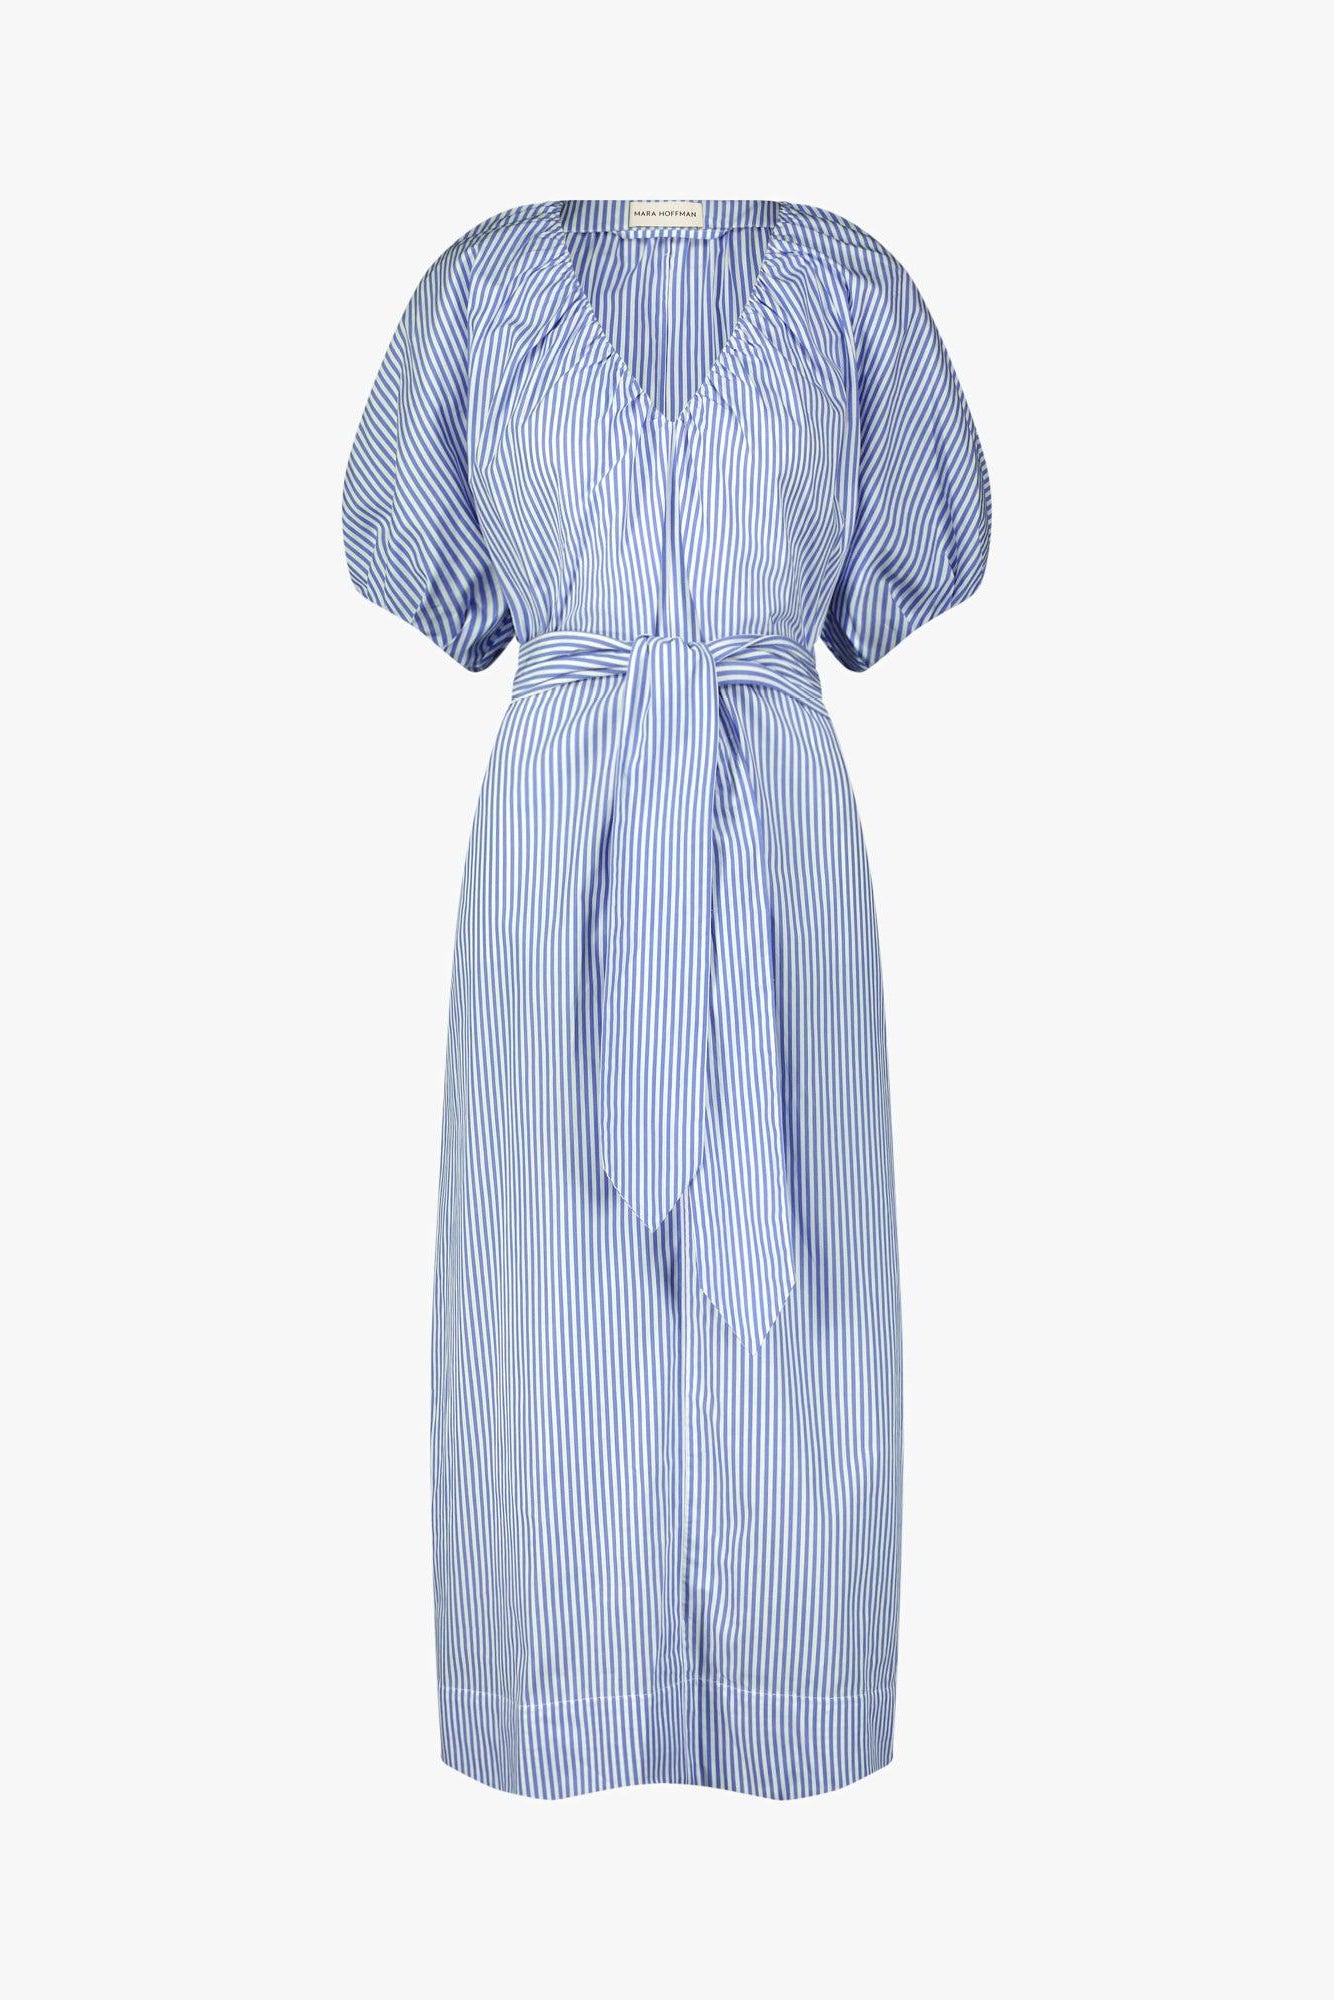 Alora Dress in Blue & White by Mara Hoffman http://www.shoprecital.com